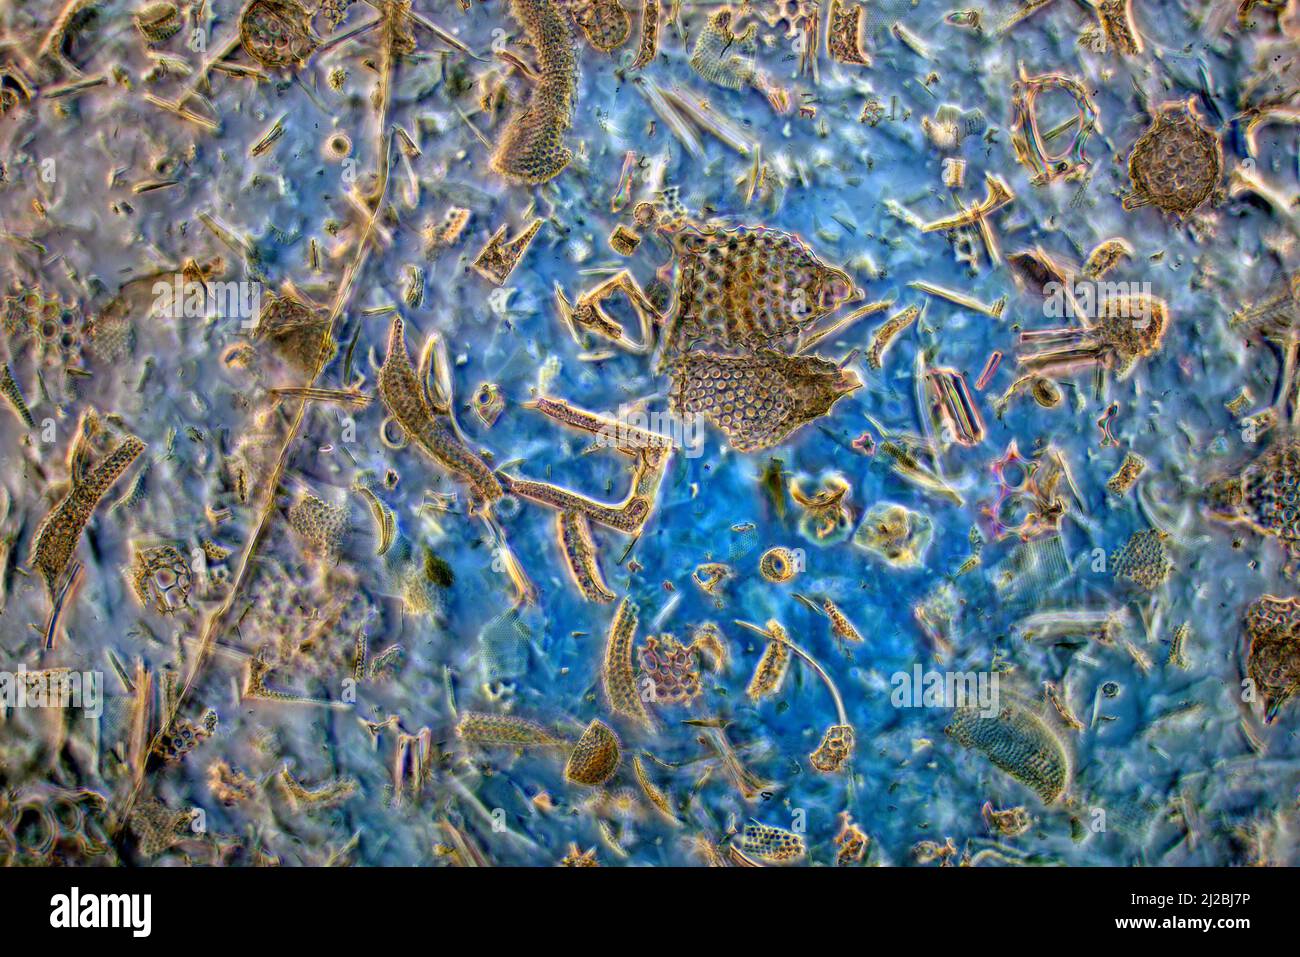 Fossil diatoms,radiolaria,sponge spicules, Barbados 1800's rich biodiversity Stock Photo